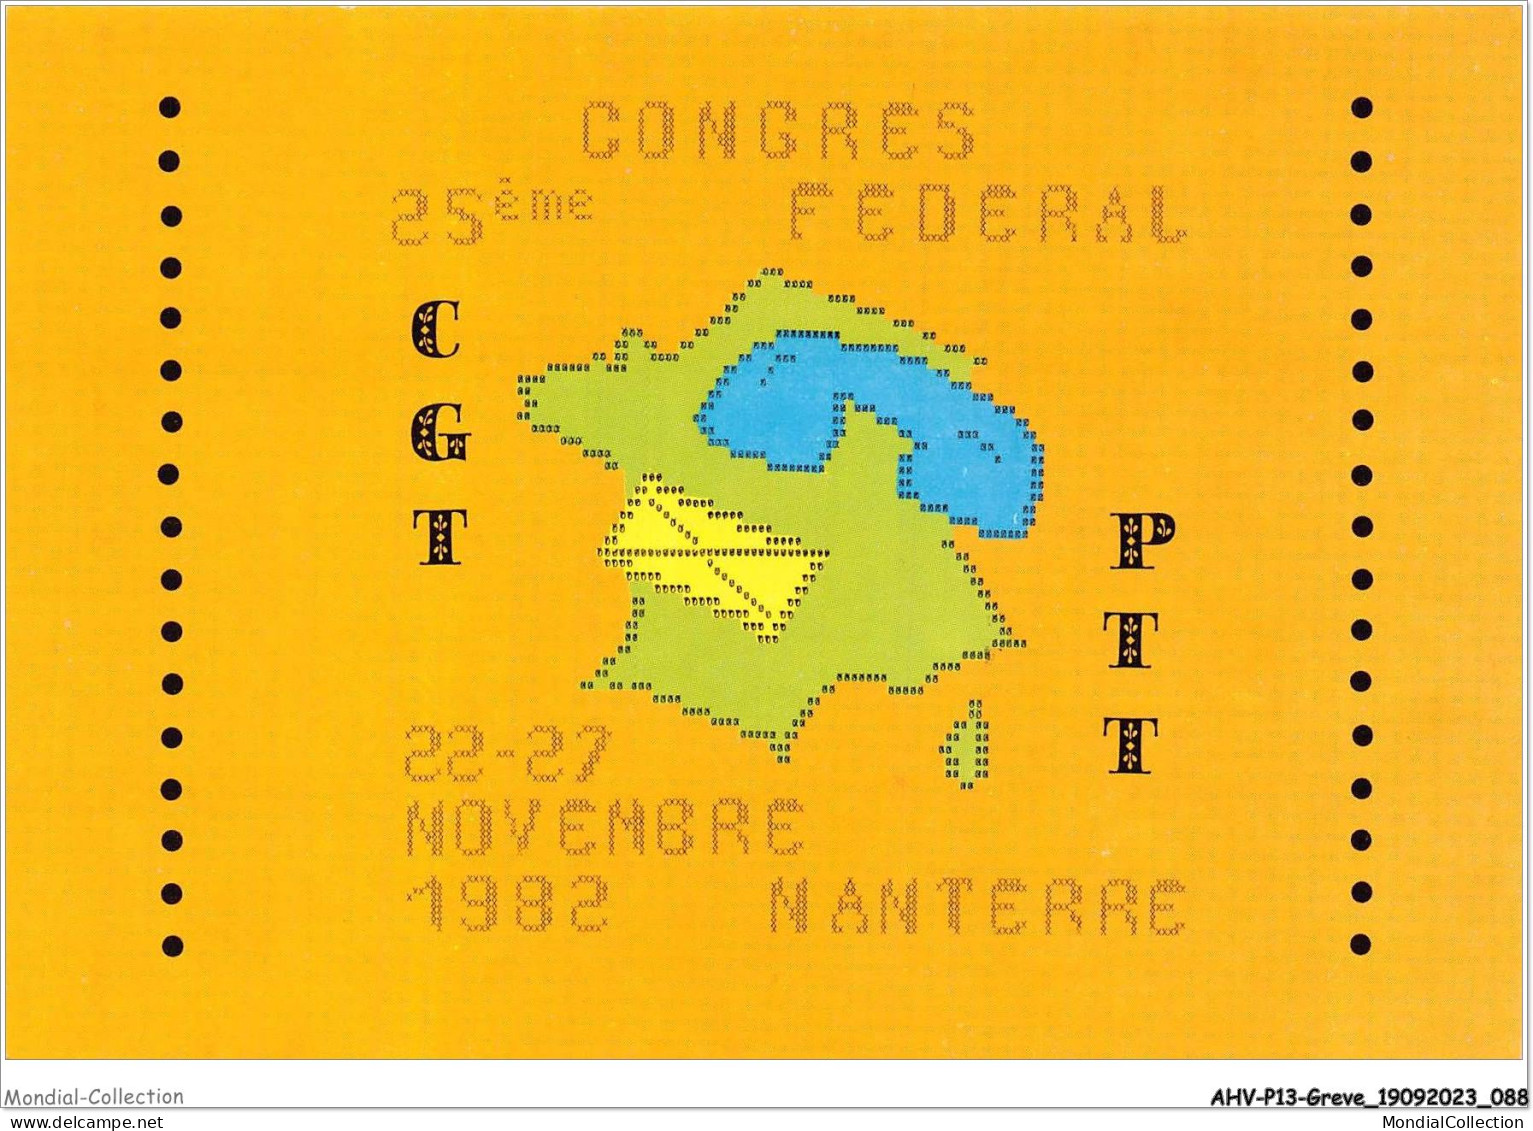 AHVP13-1158 - GREVE - CGT PTT 25è Congrès Féderal  Nanterre - 22 - 27 Novembre - Grèves